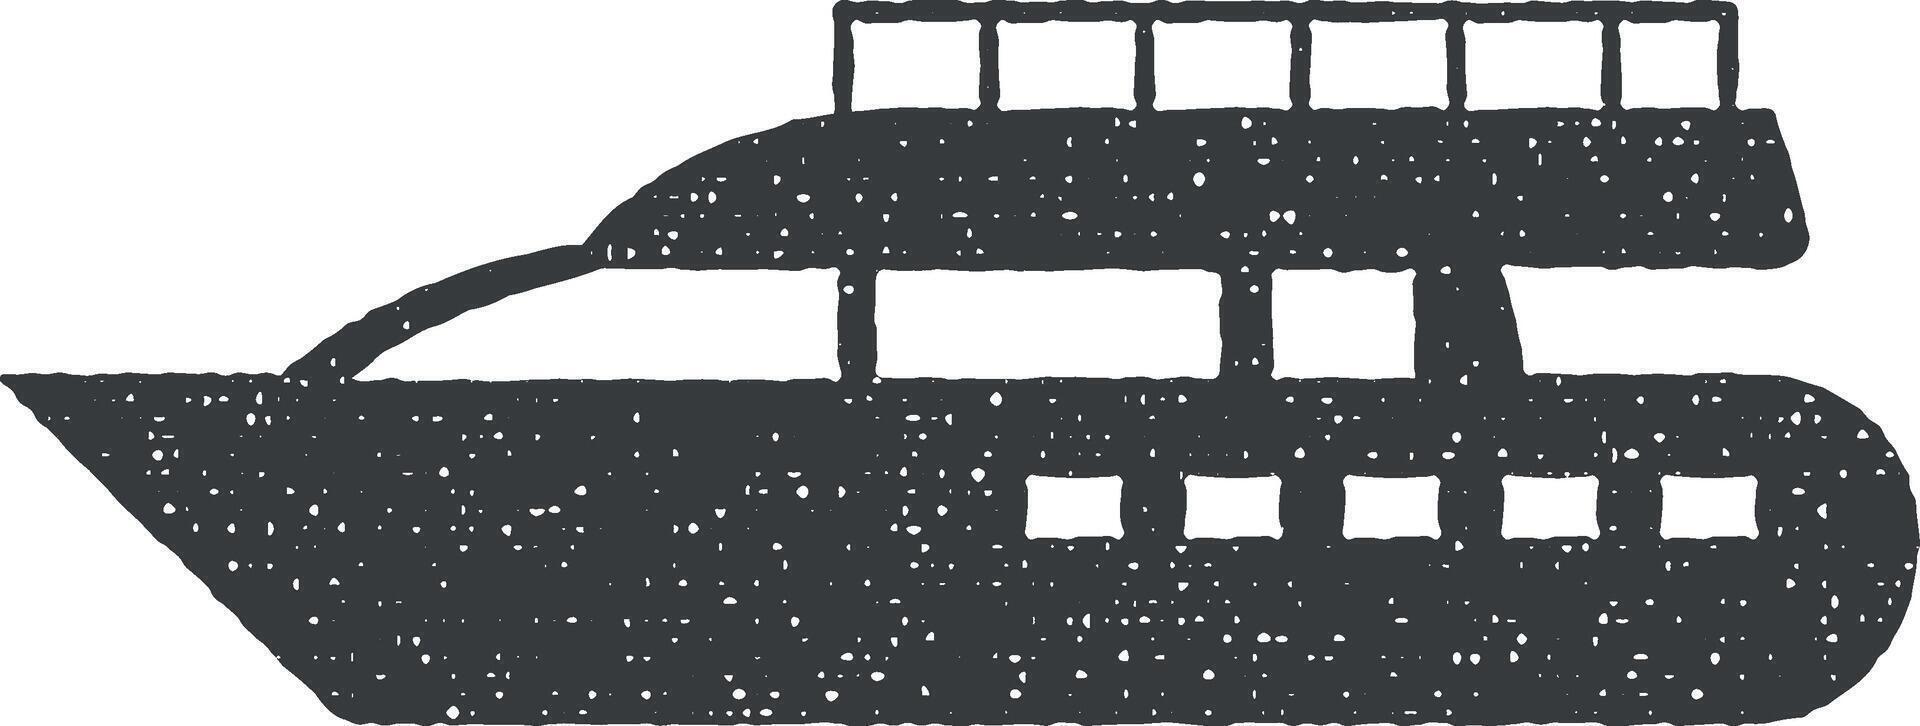 agua transporte, Embarcacion vector icono ilustración con sello efecto